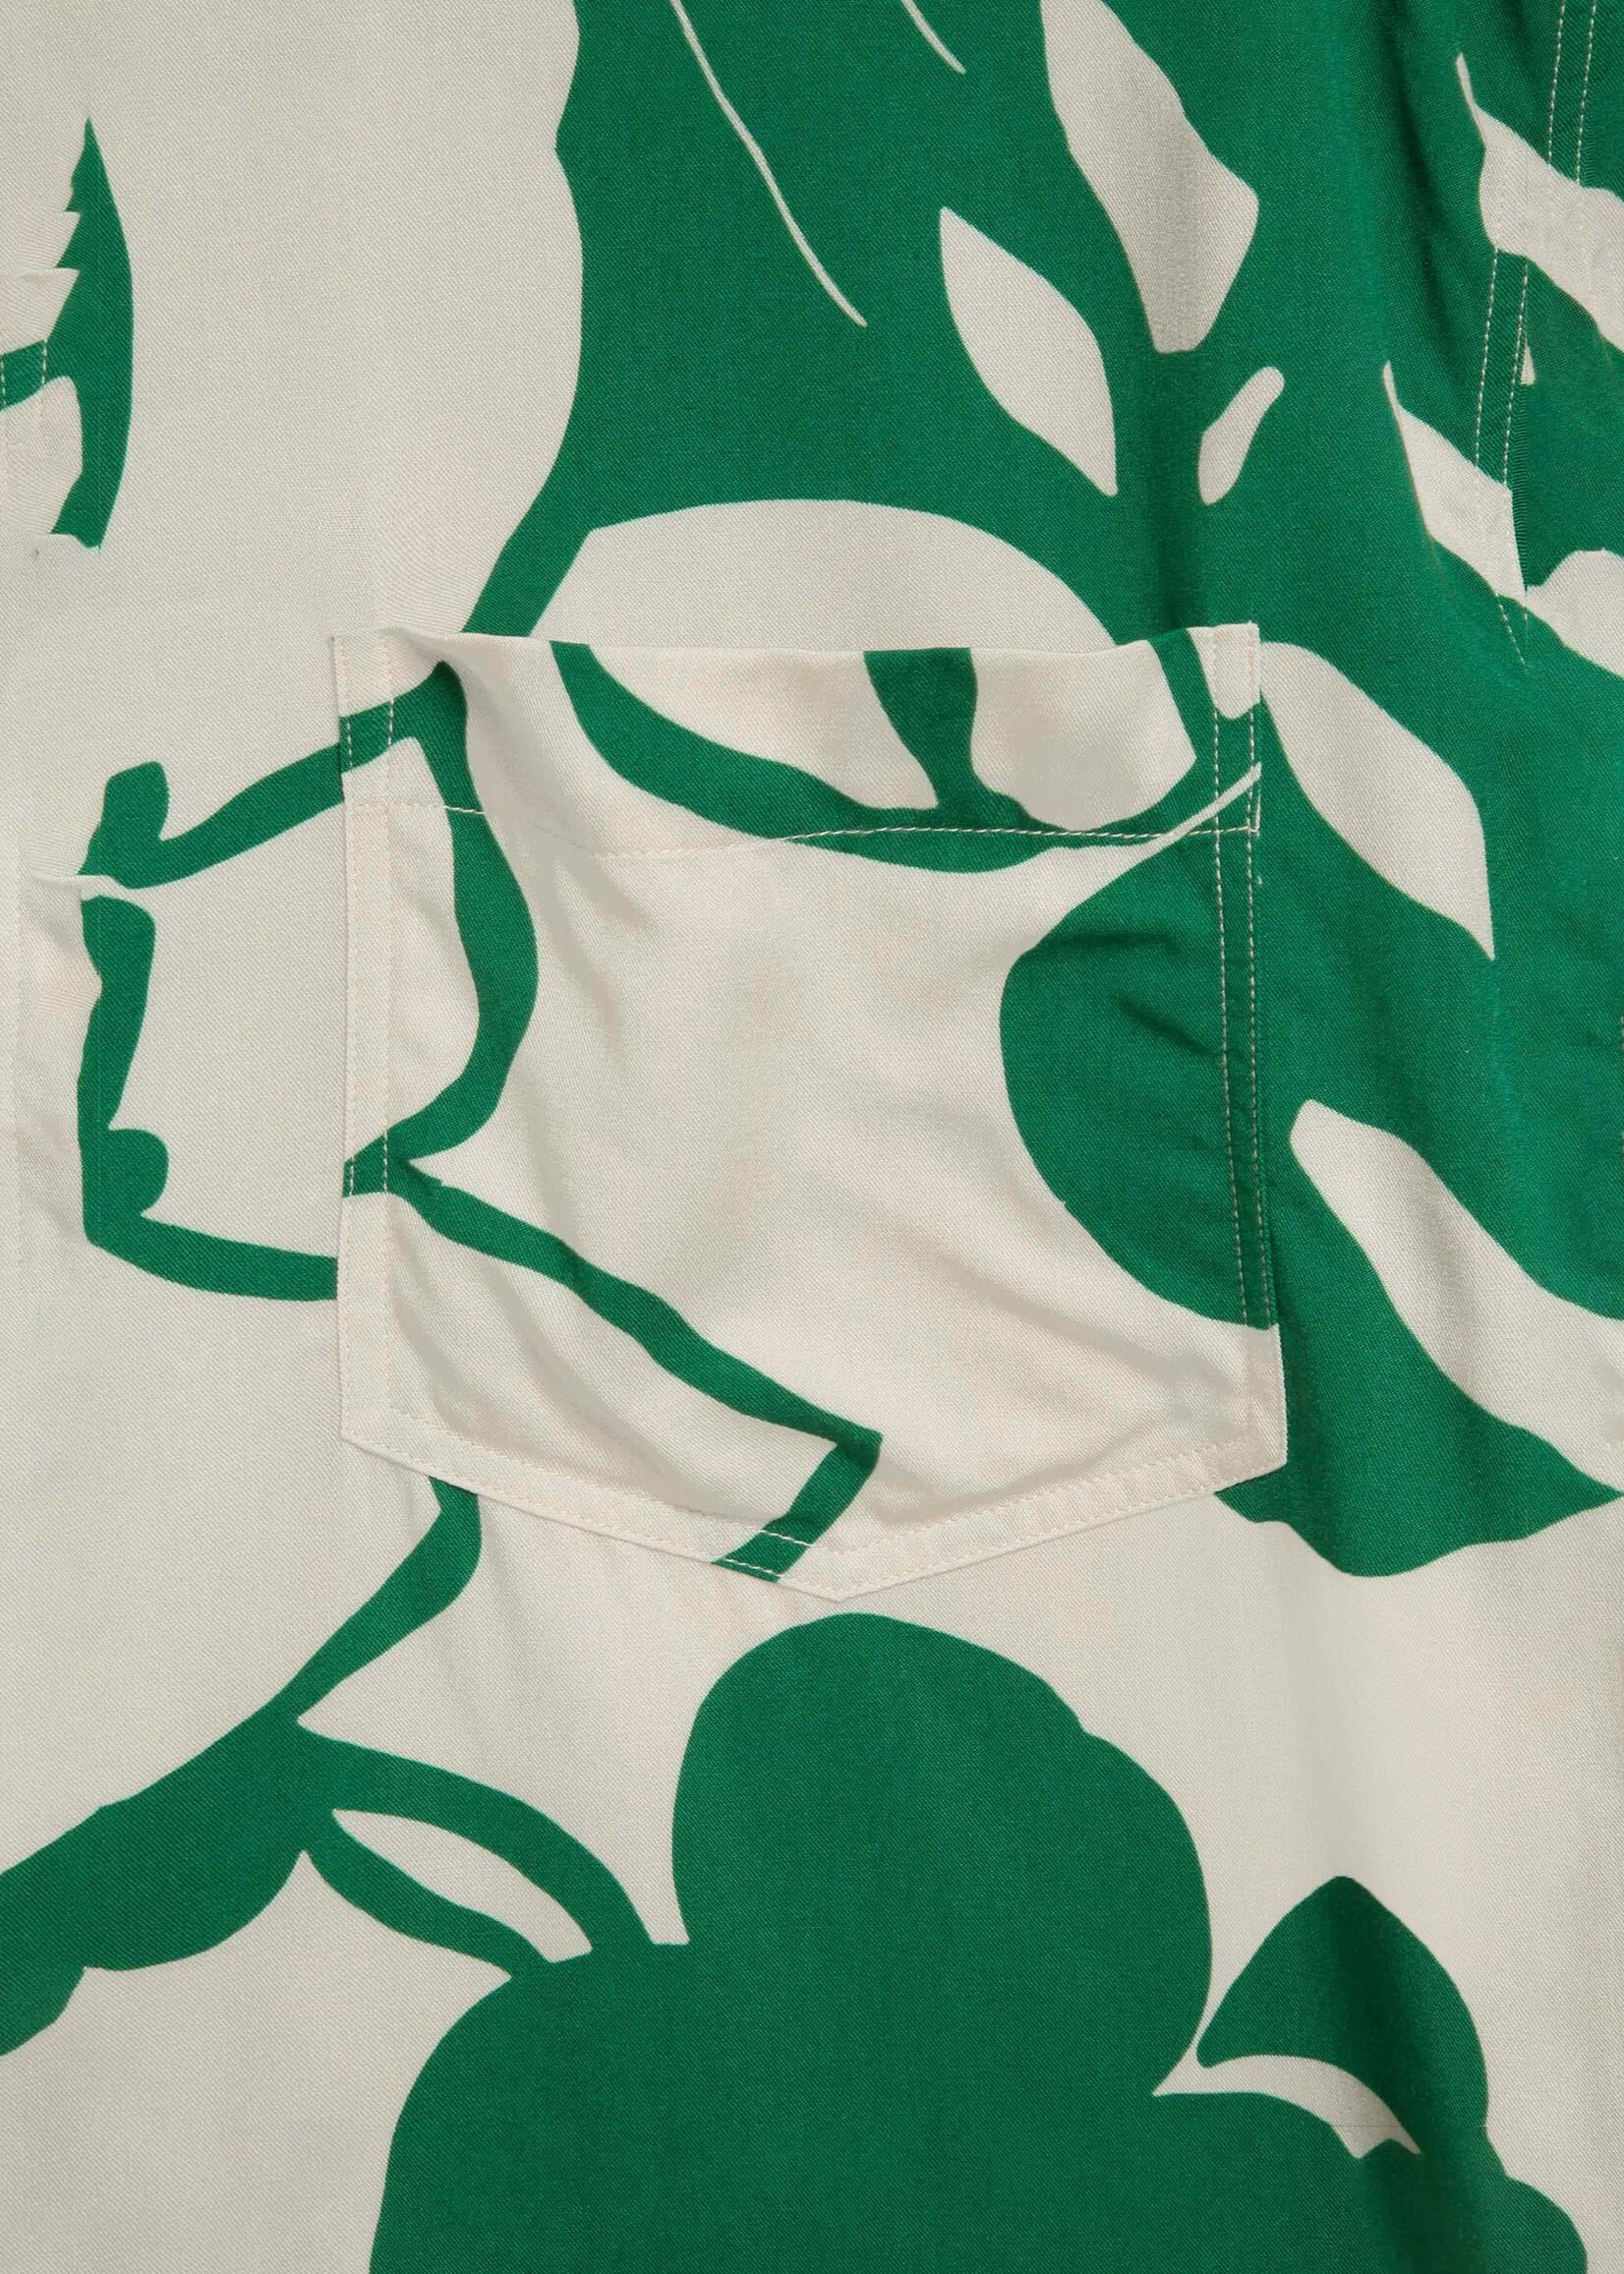 YMC Mitchum Shirt in Green Floral Print